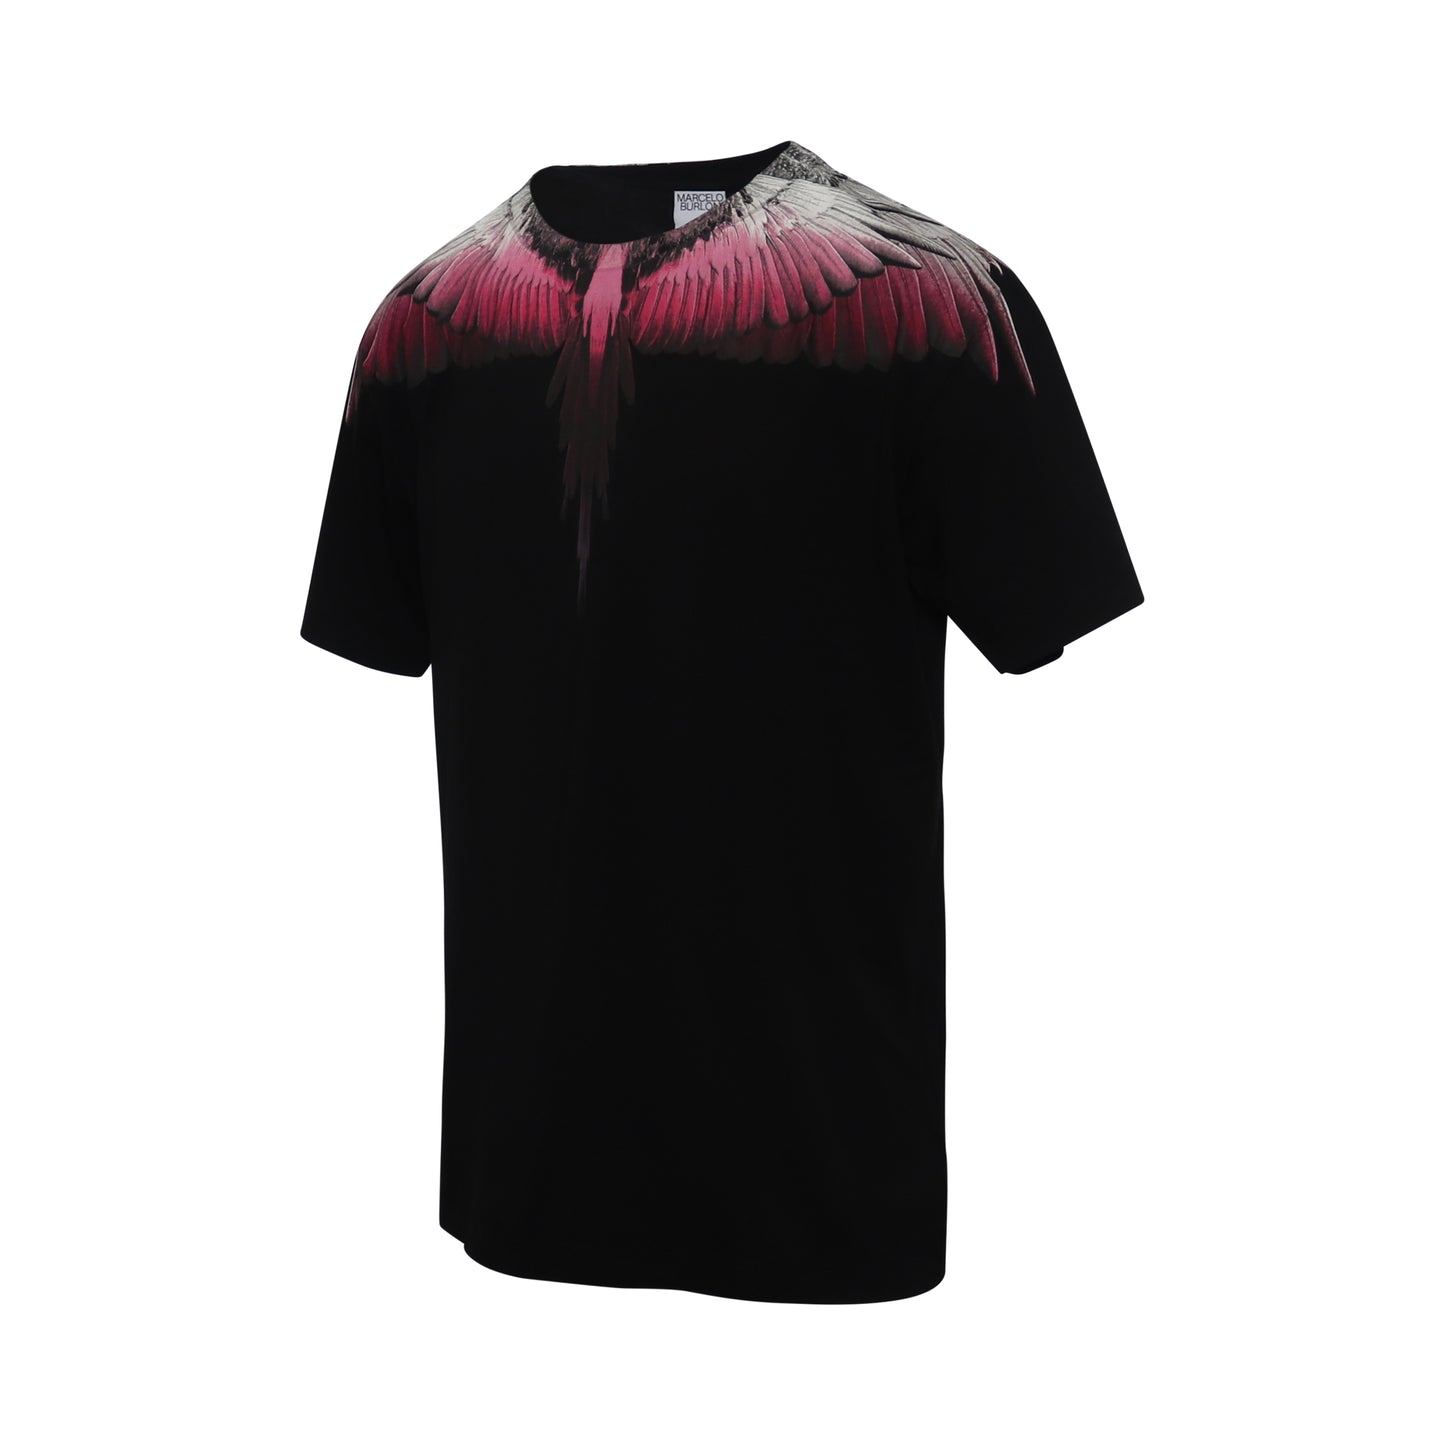 Classic Wings Print T-Shirt in Fuchsia